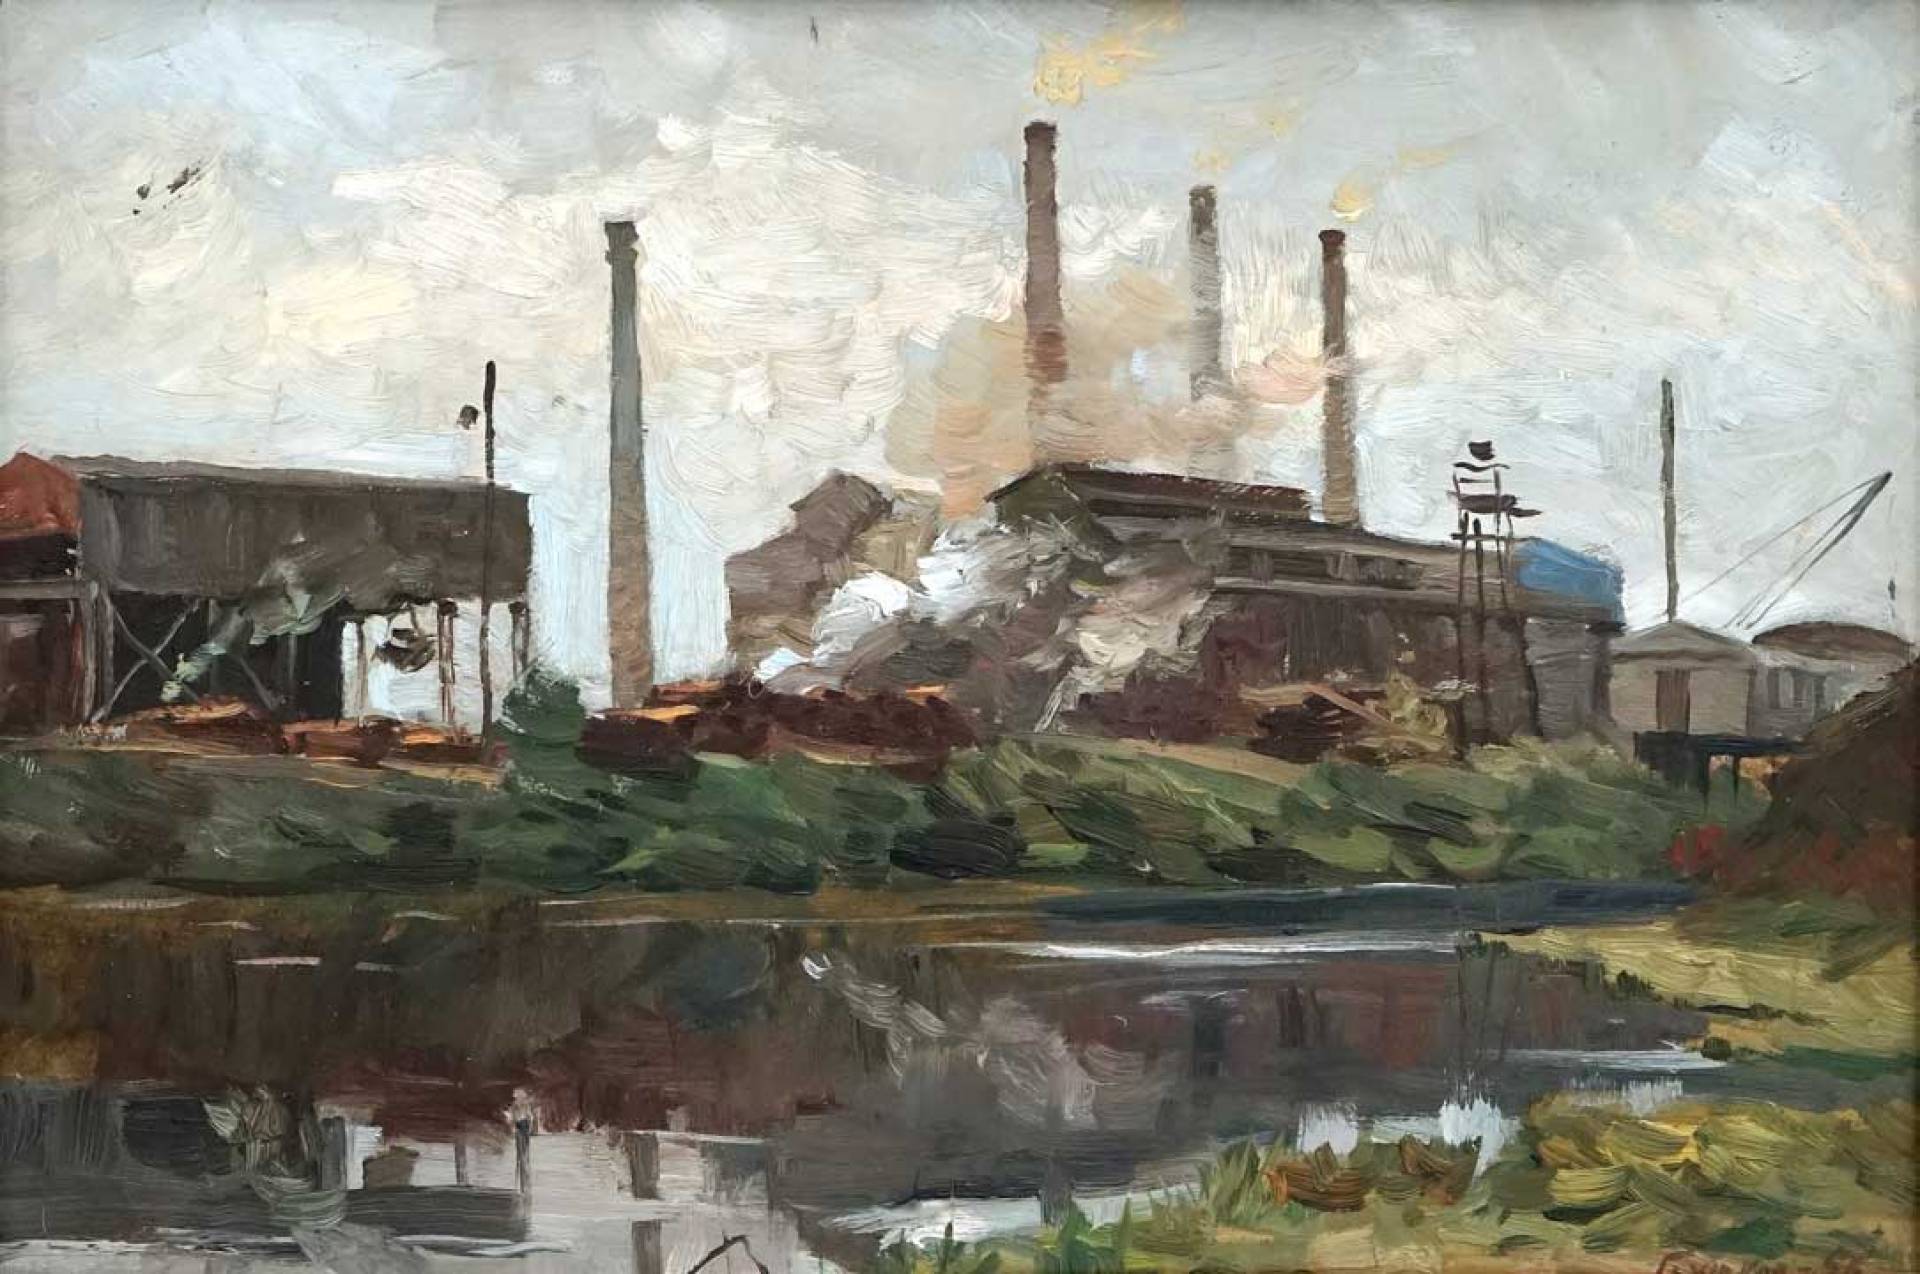 On the Factory, Boris Glushkov, Buy the painting Oil